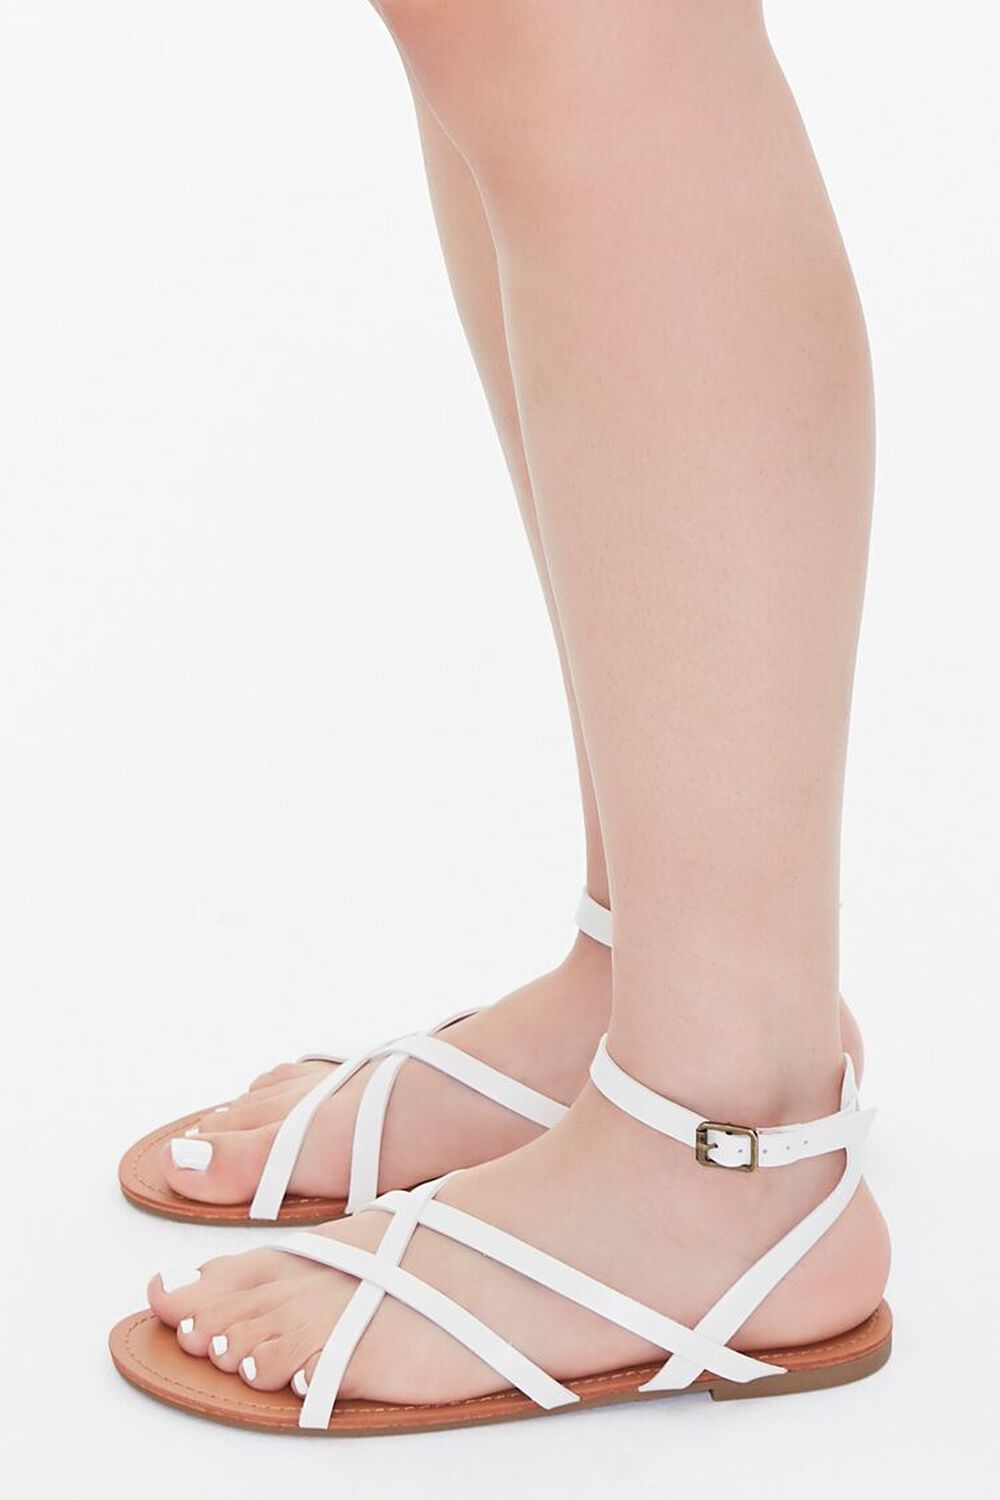 WHITE Faux Leather Crisscross Sandals, image 2